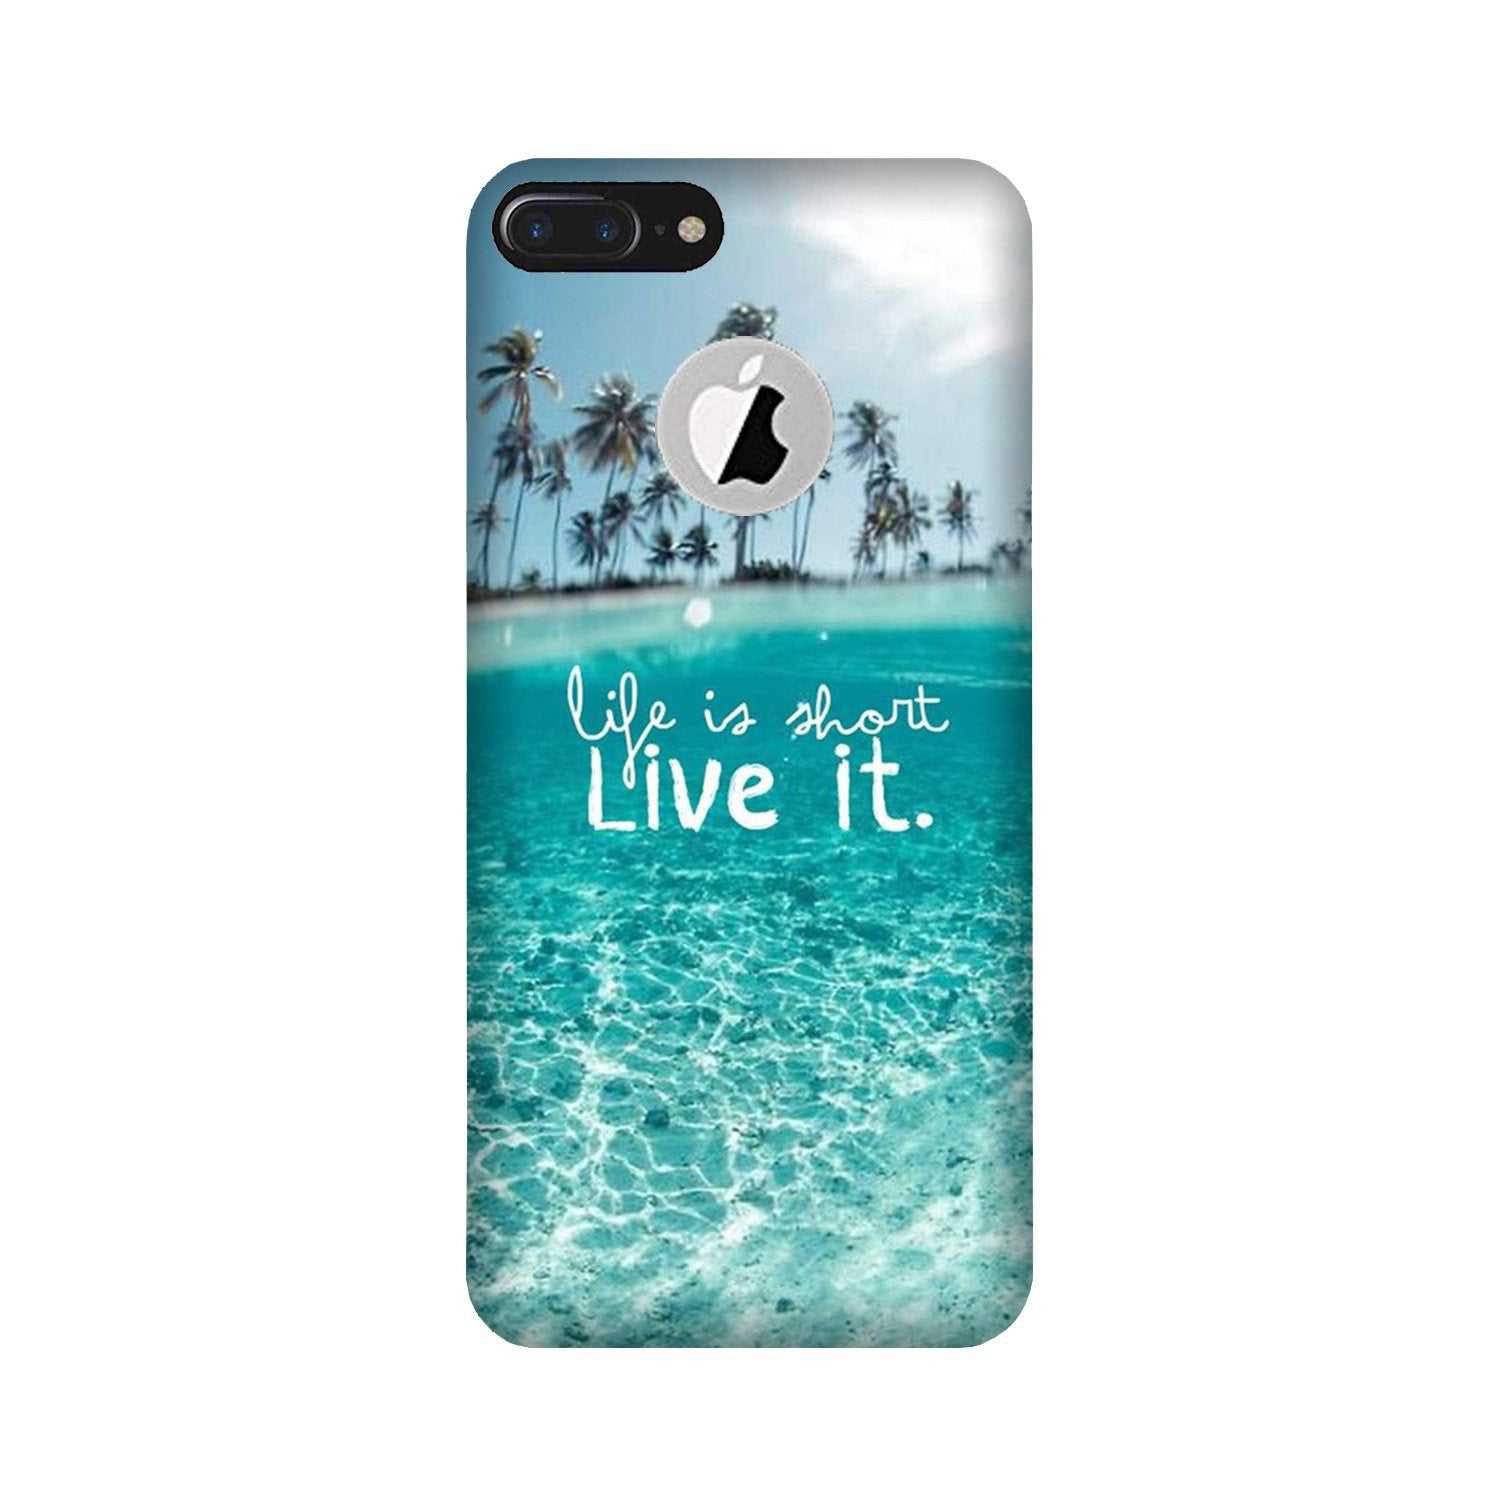 Life is short live it Case for iPhone 7 Plus logo cut